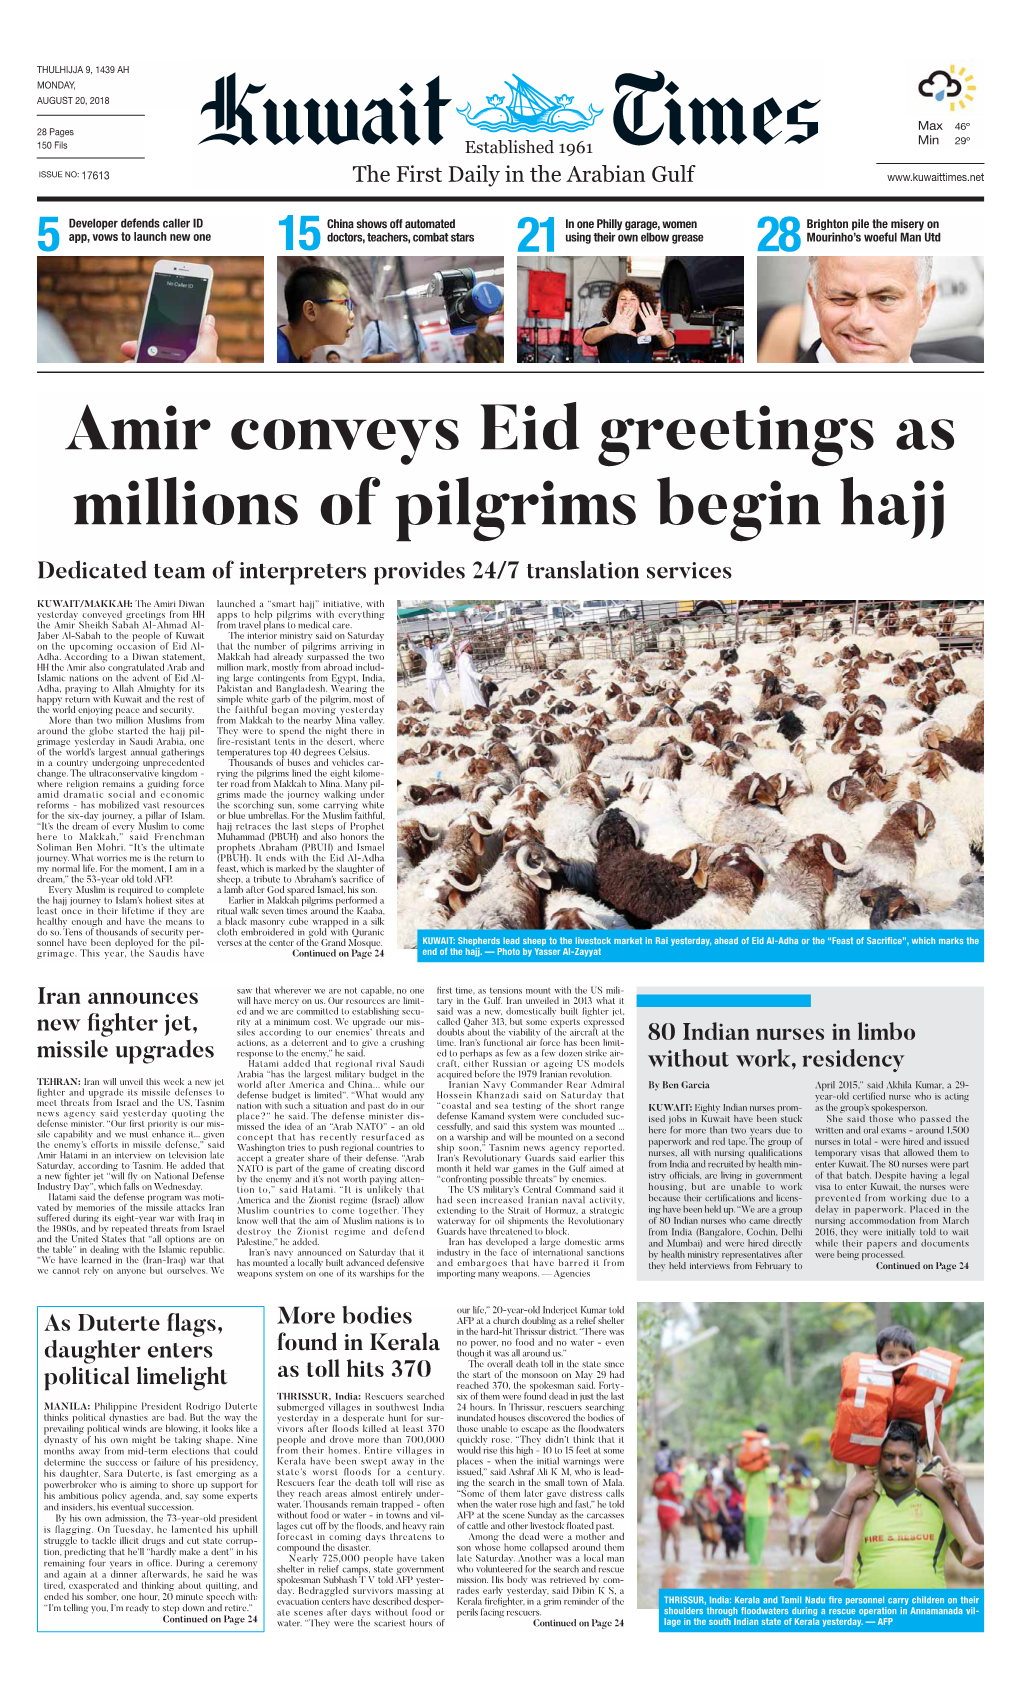 Amir Conveys Eid Greetings As Millions of Pilgrims Begin Hajj Dedicated Team of Interpreters Provides 24/7 Translation Services